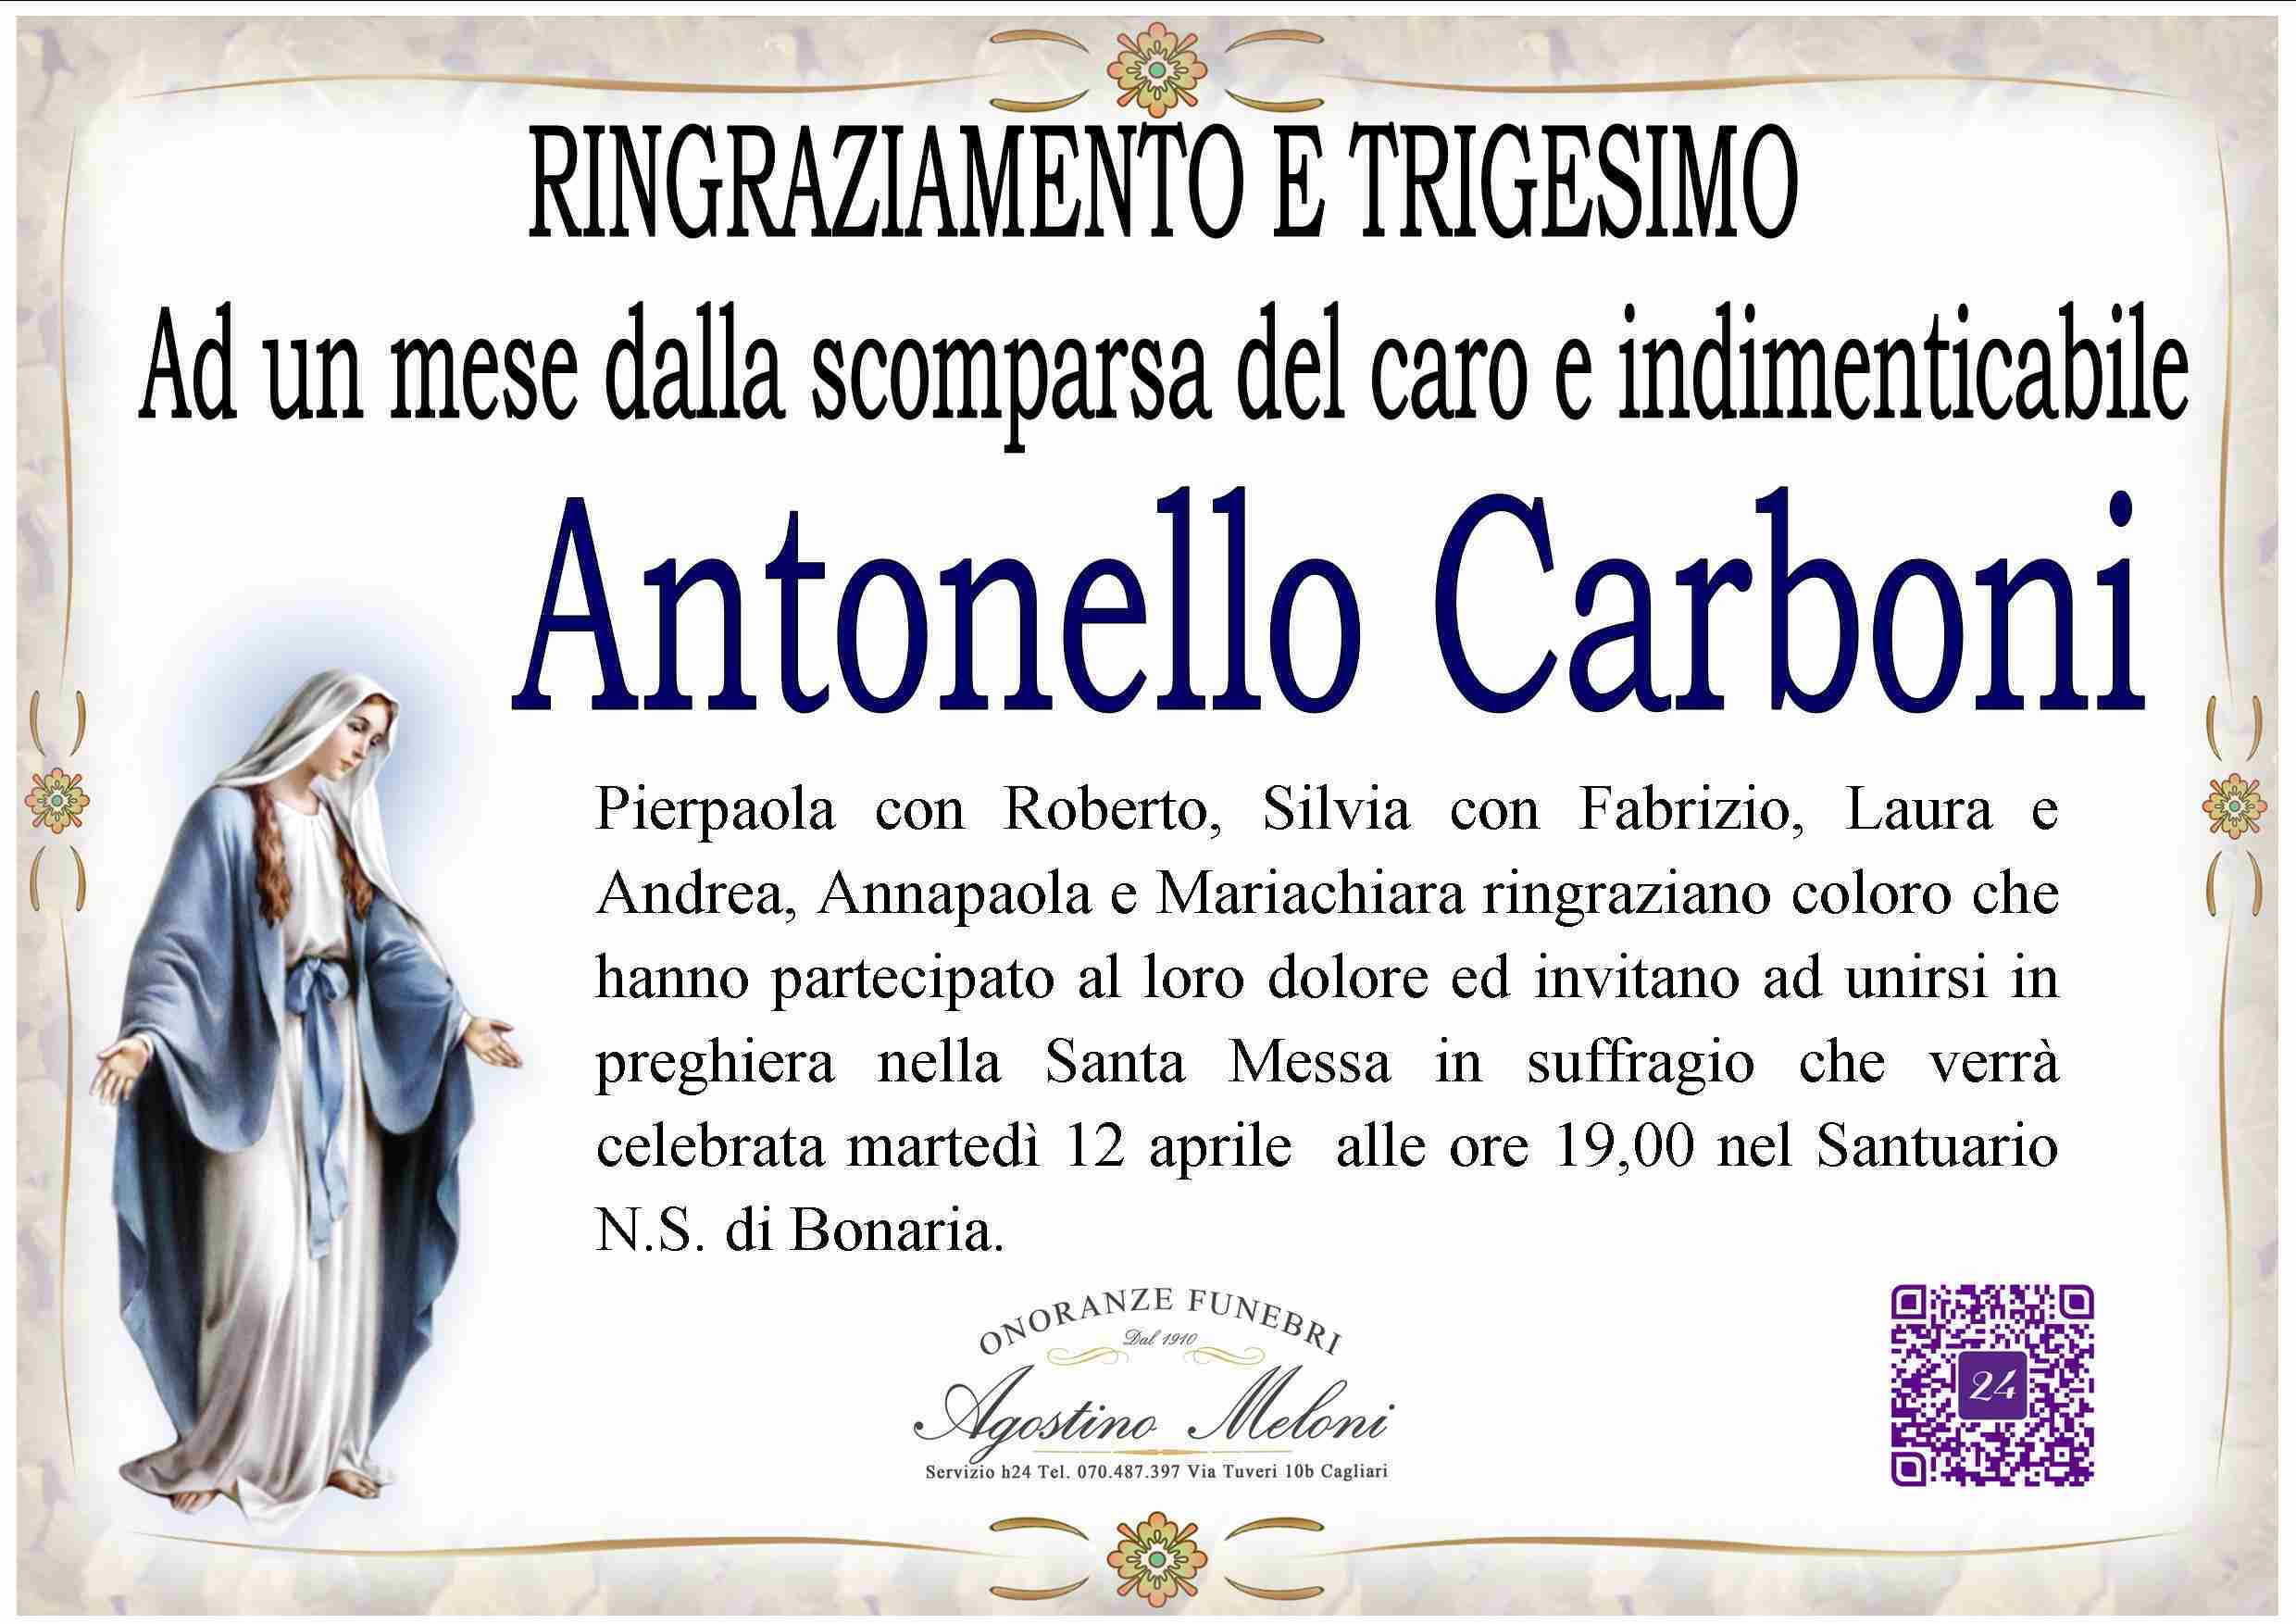 Antonello Carboni